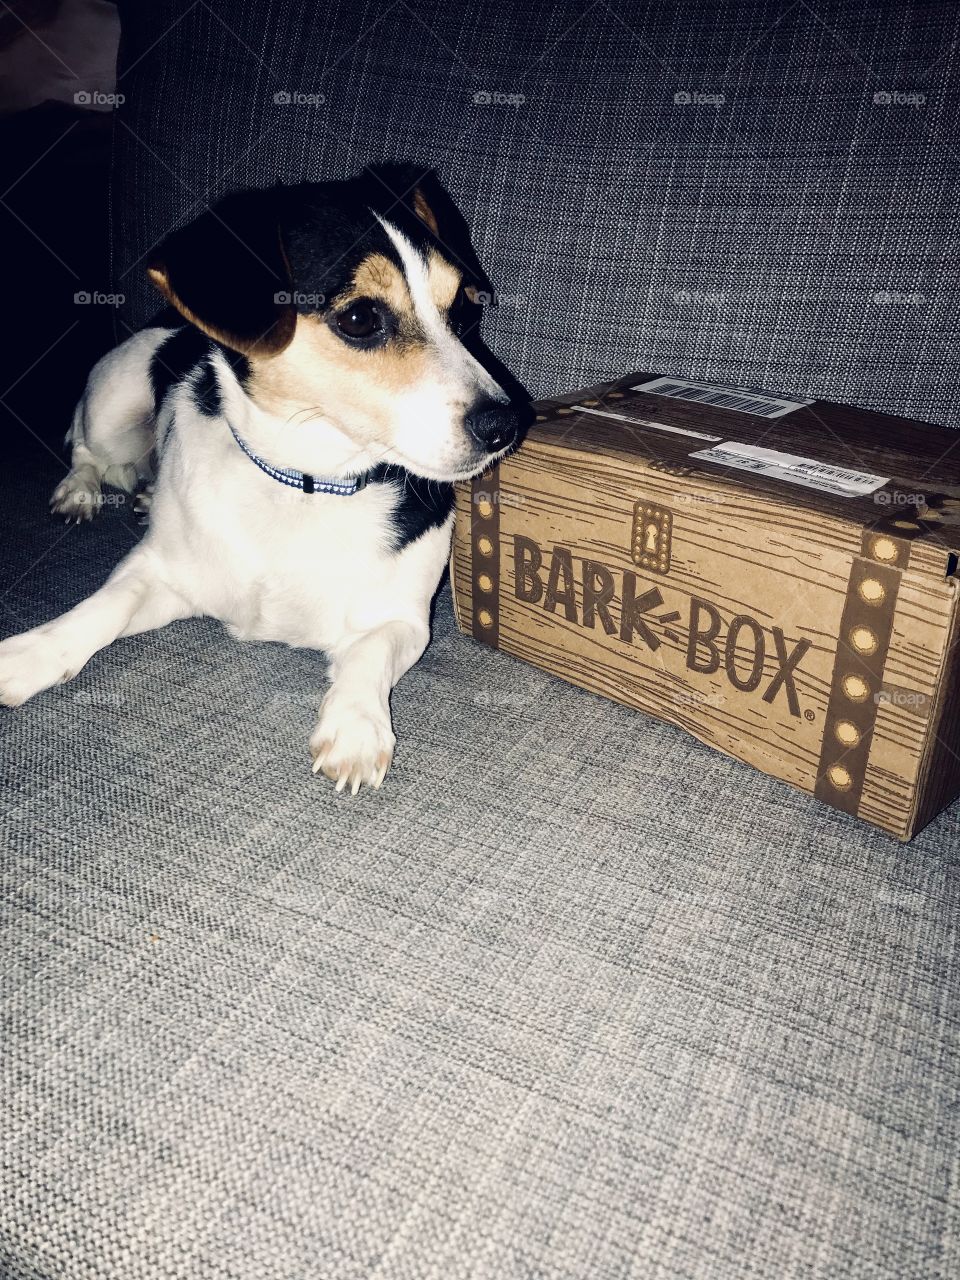 Rosco opening his bark box